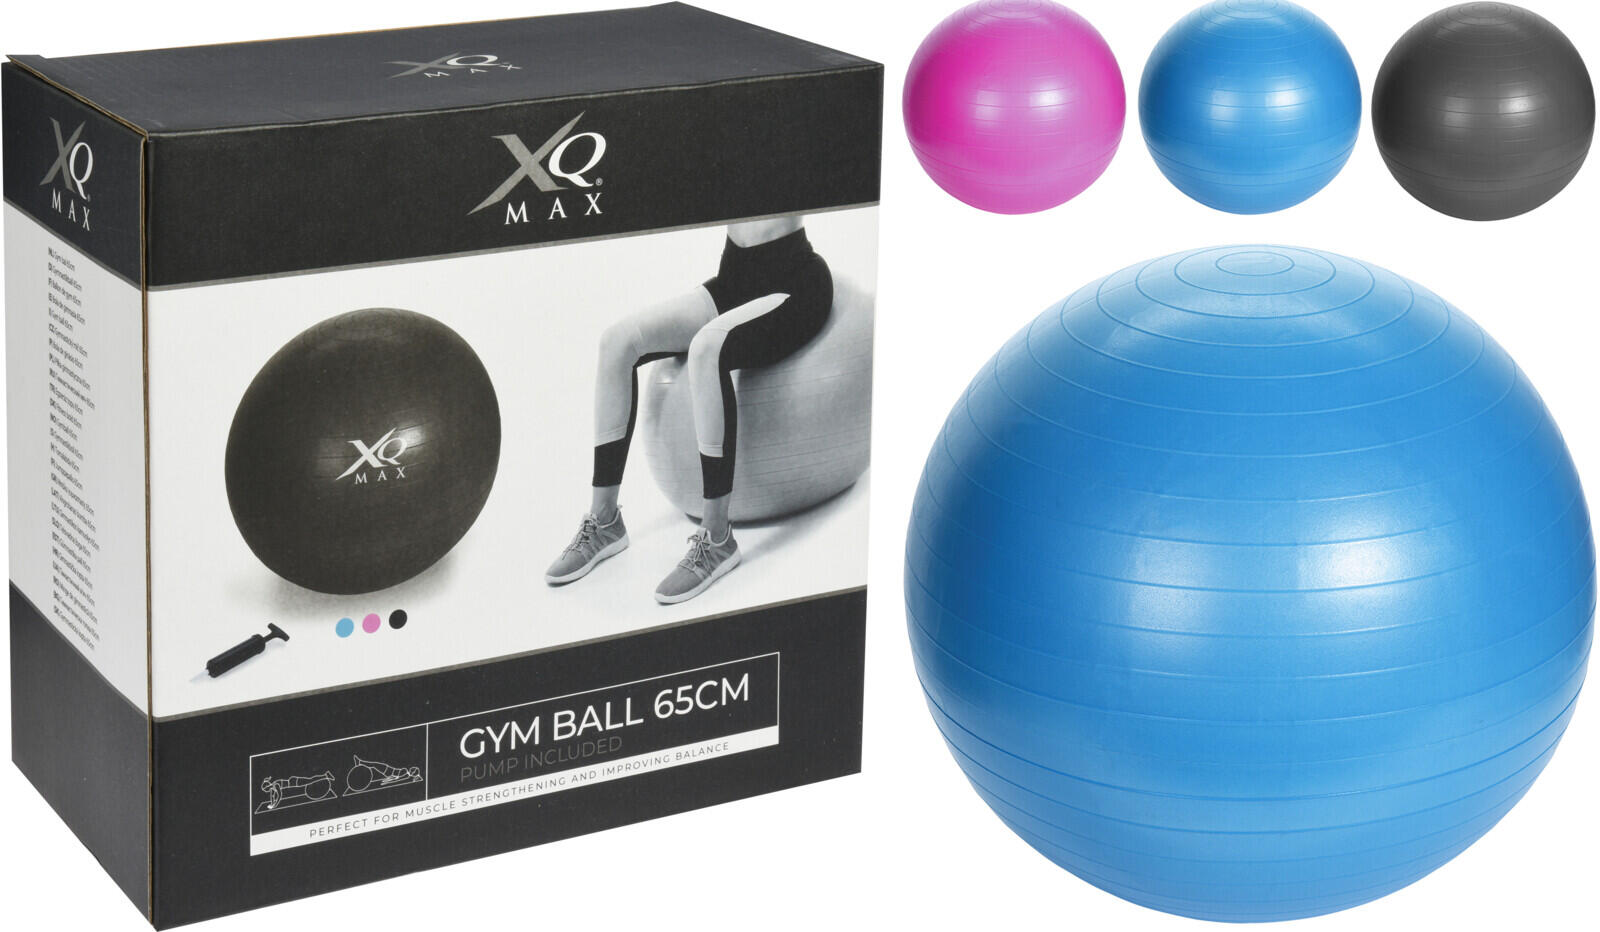 míč YOGABALL pr.65cm PVC XQ MAX mix barev+pumpička 0.87 Kg MAXMIX Sklad14 386226 183